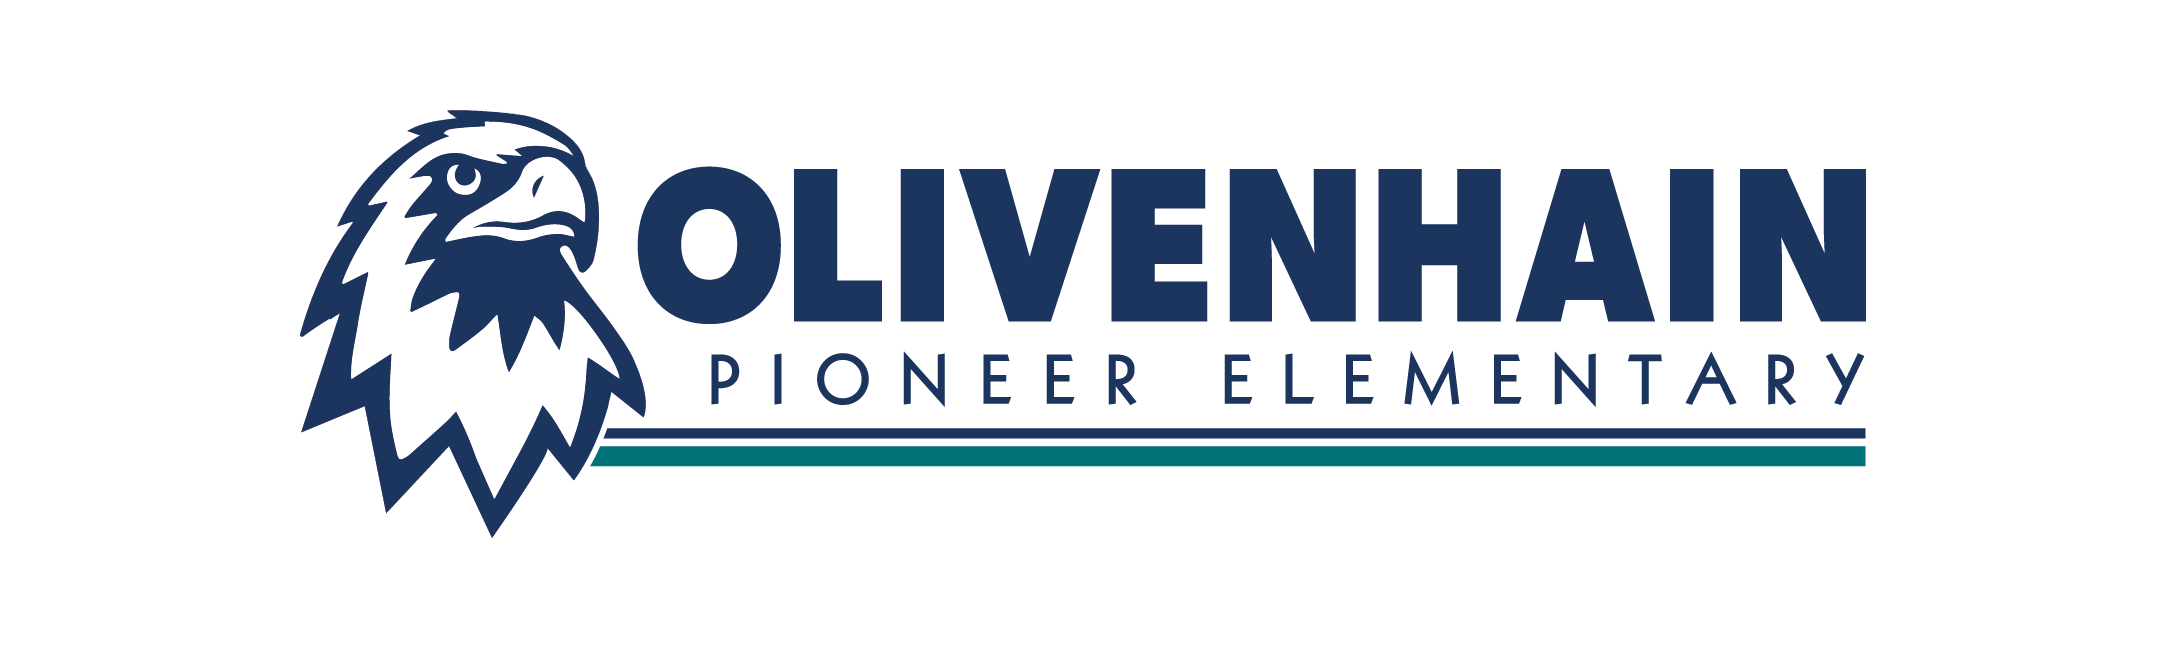 Olivenhain Pioneer Elementary PTA and EEF